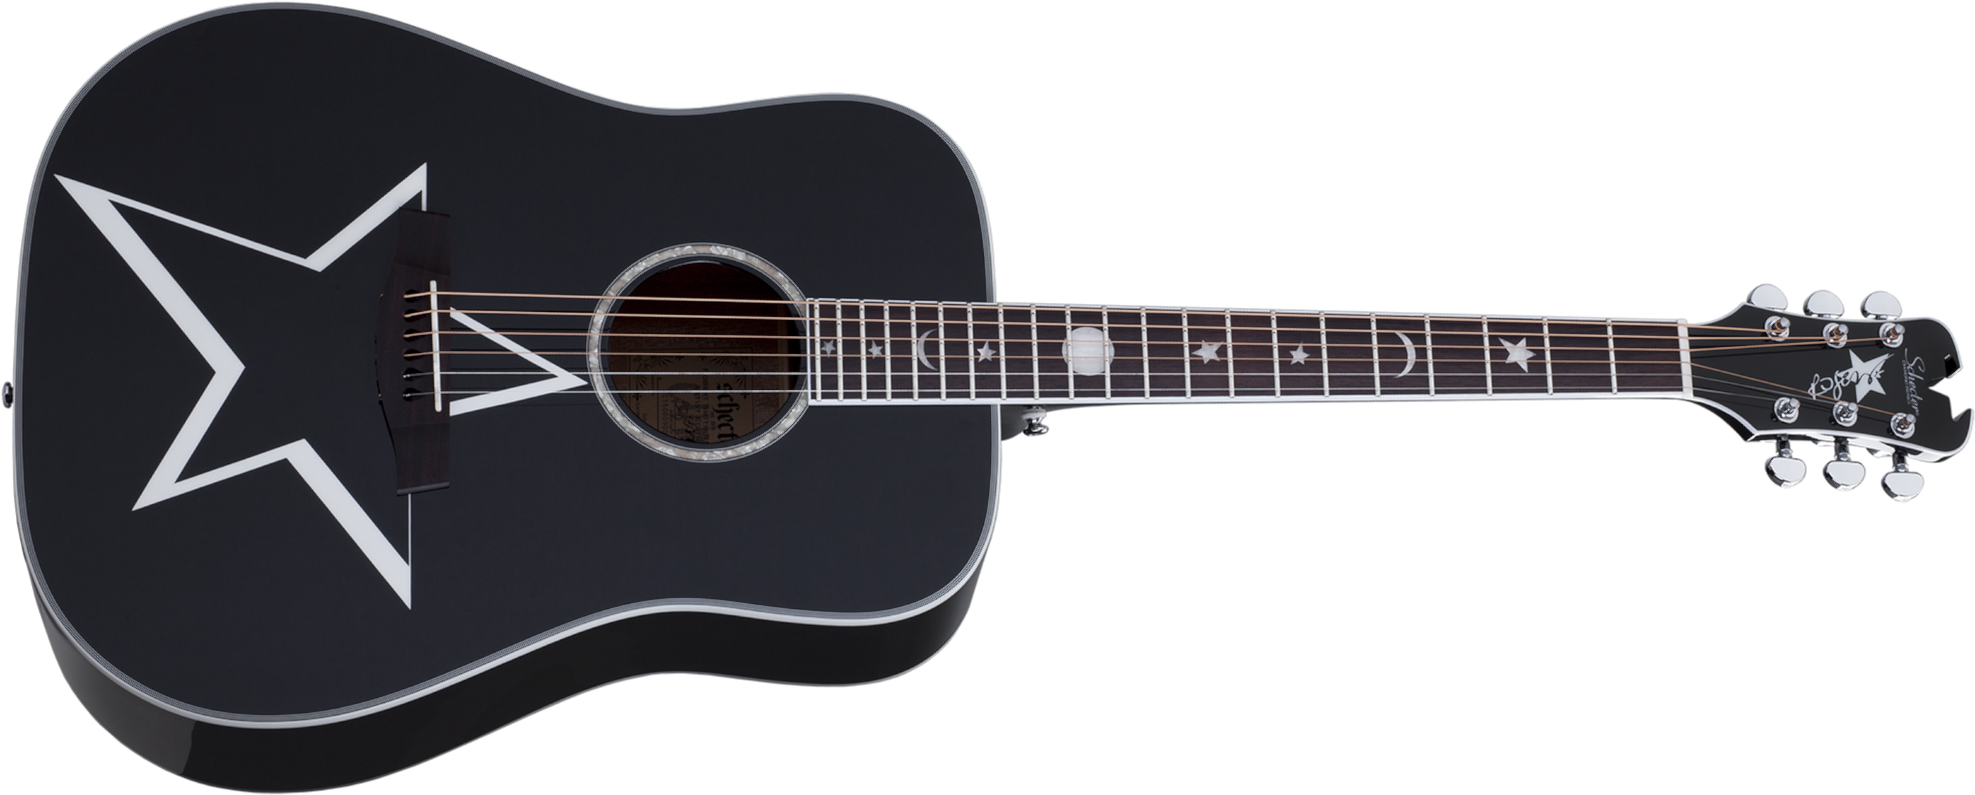 Schecter Robert Smith Rs-1000 Busker Dreadnought Tout Acajou Rw - Black - Acoustic guitar & electro - Main picture